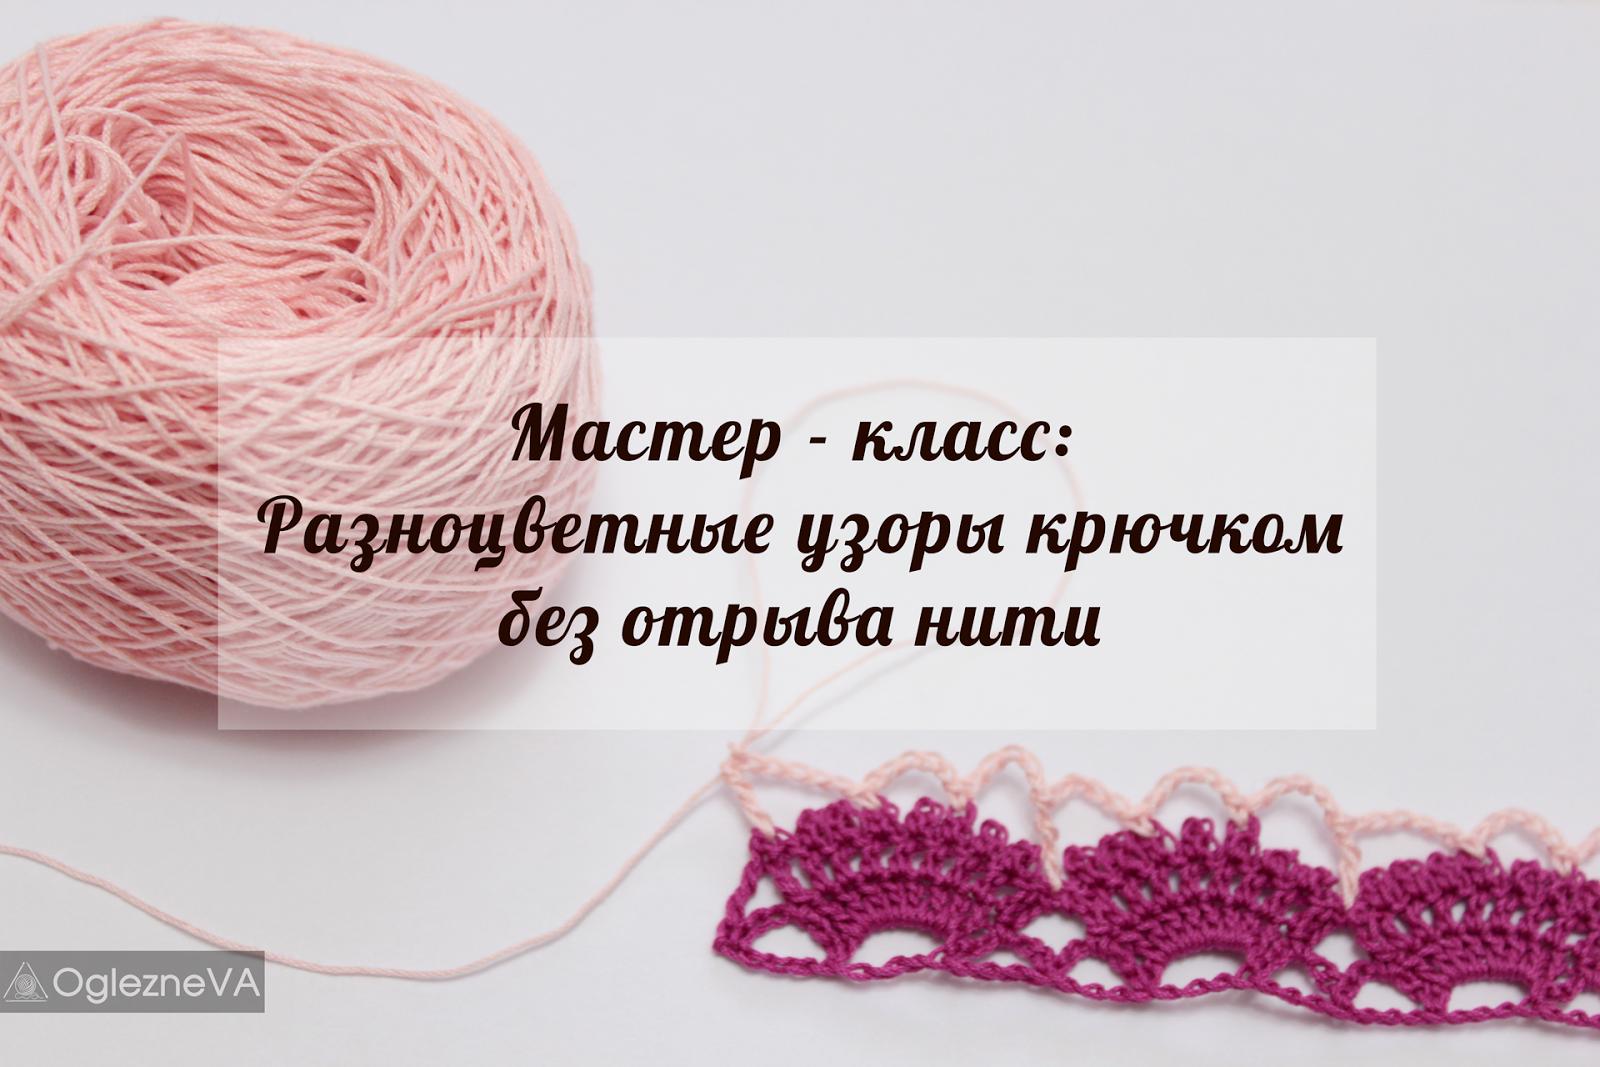 http://oglezneva.blogspot.ru/2015/02/crochet-tutorial-how-to-crochet-without.html